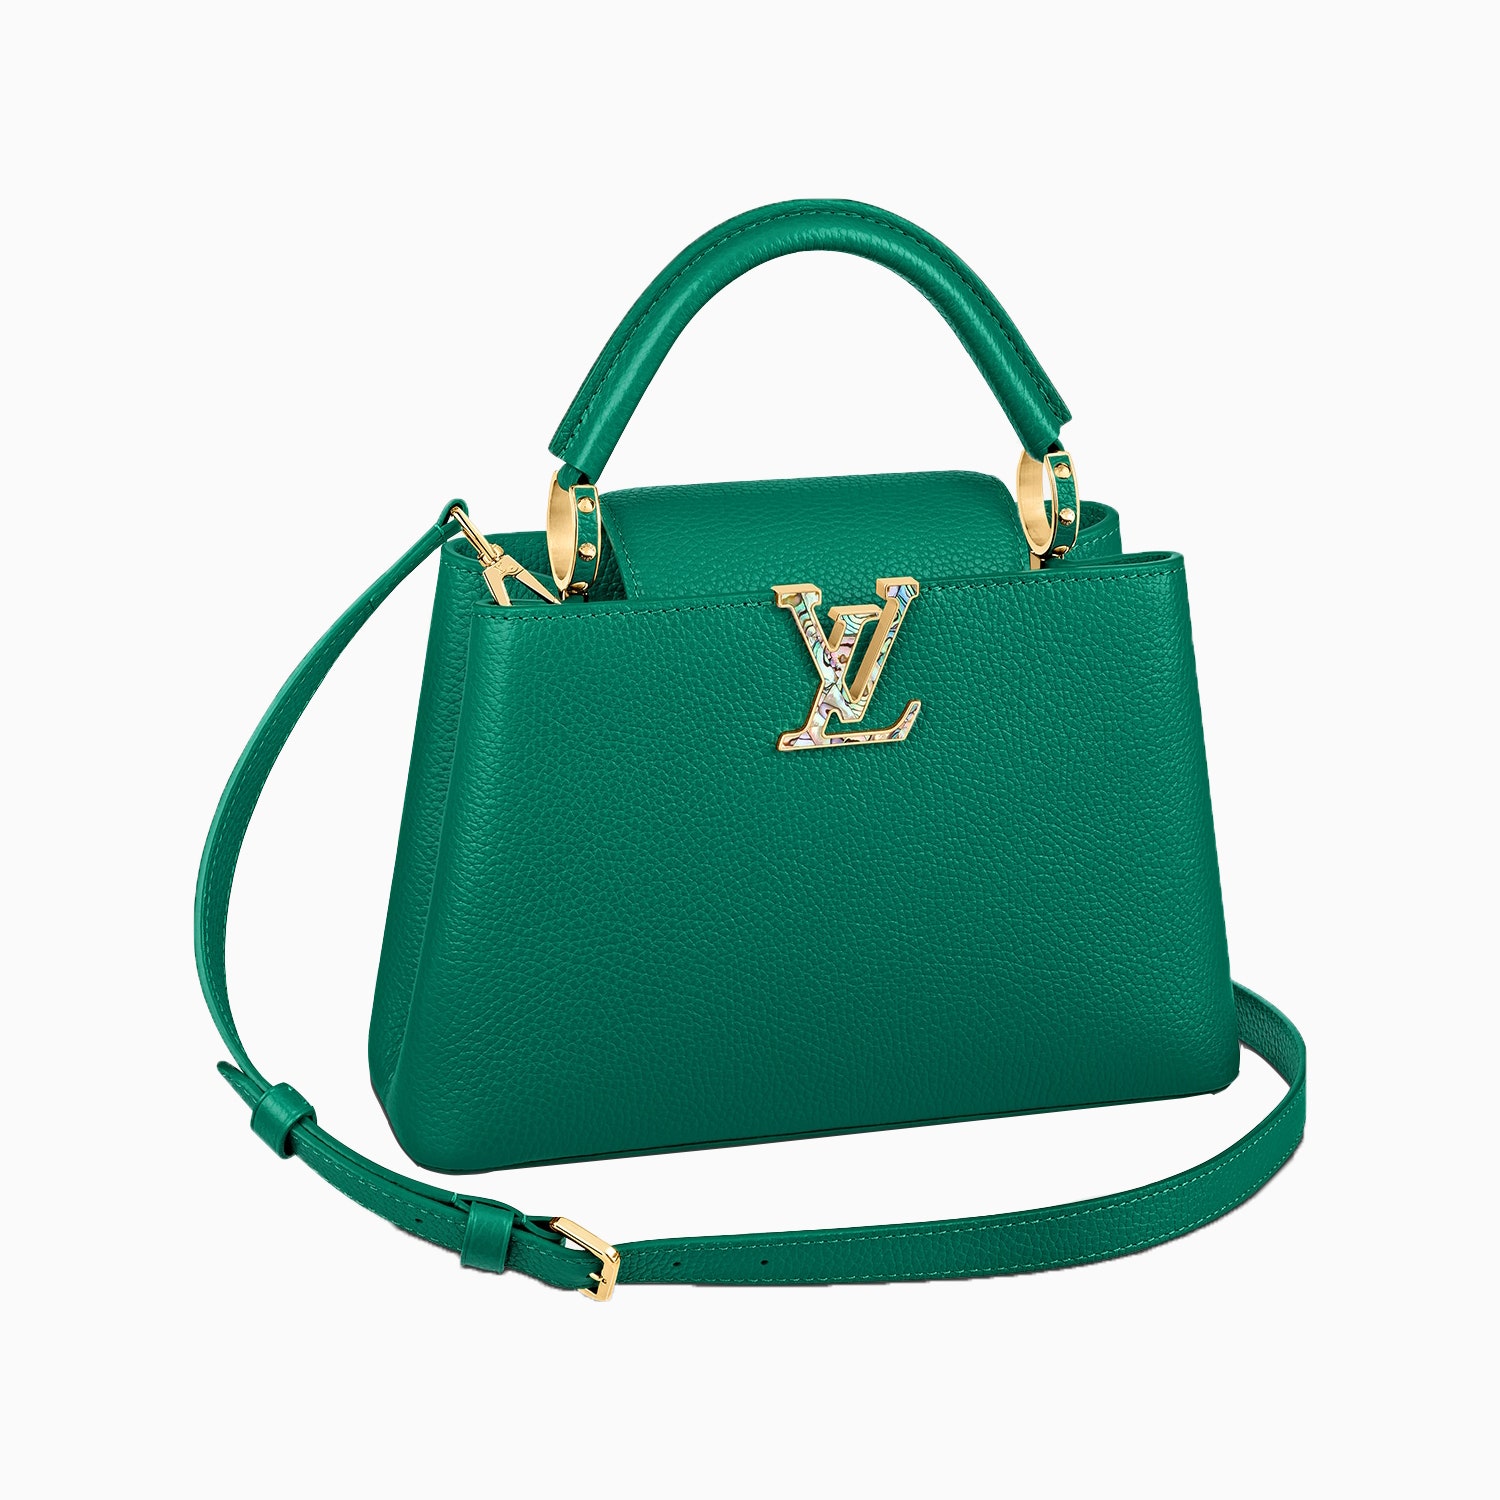 Сумка Louis Vuitton 410000 рублей louisvuitton.com